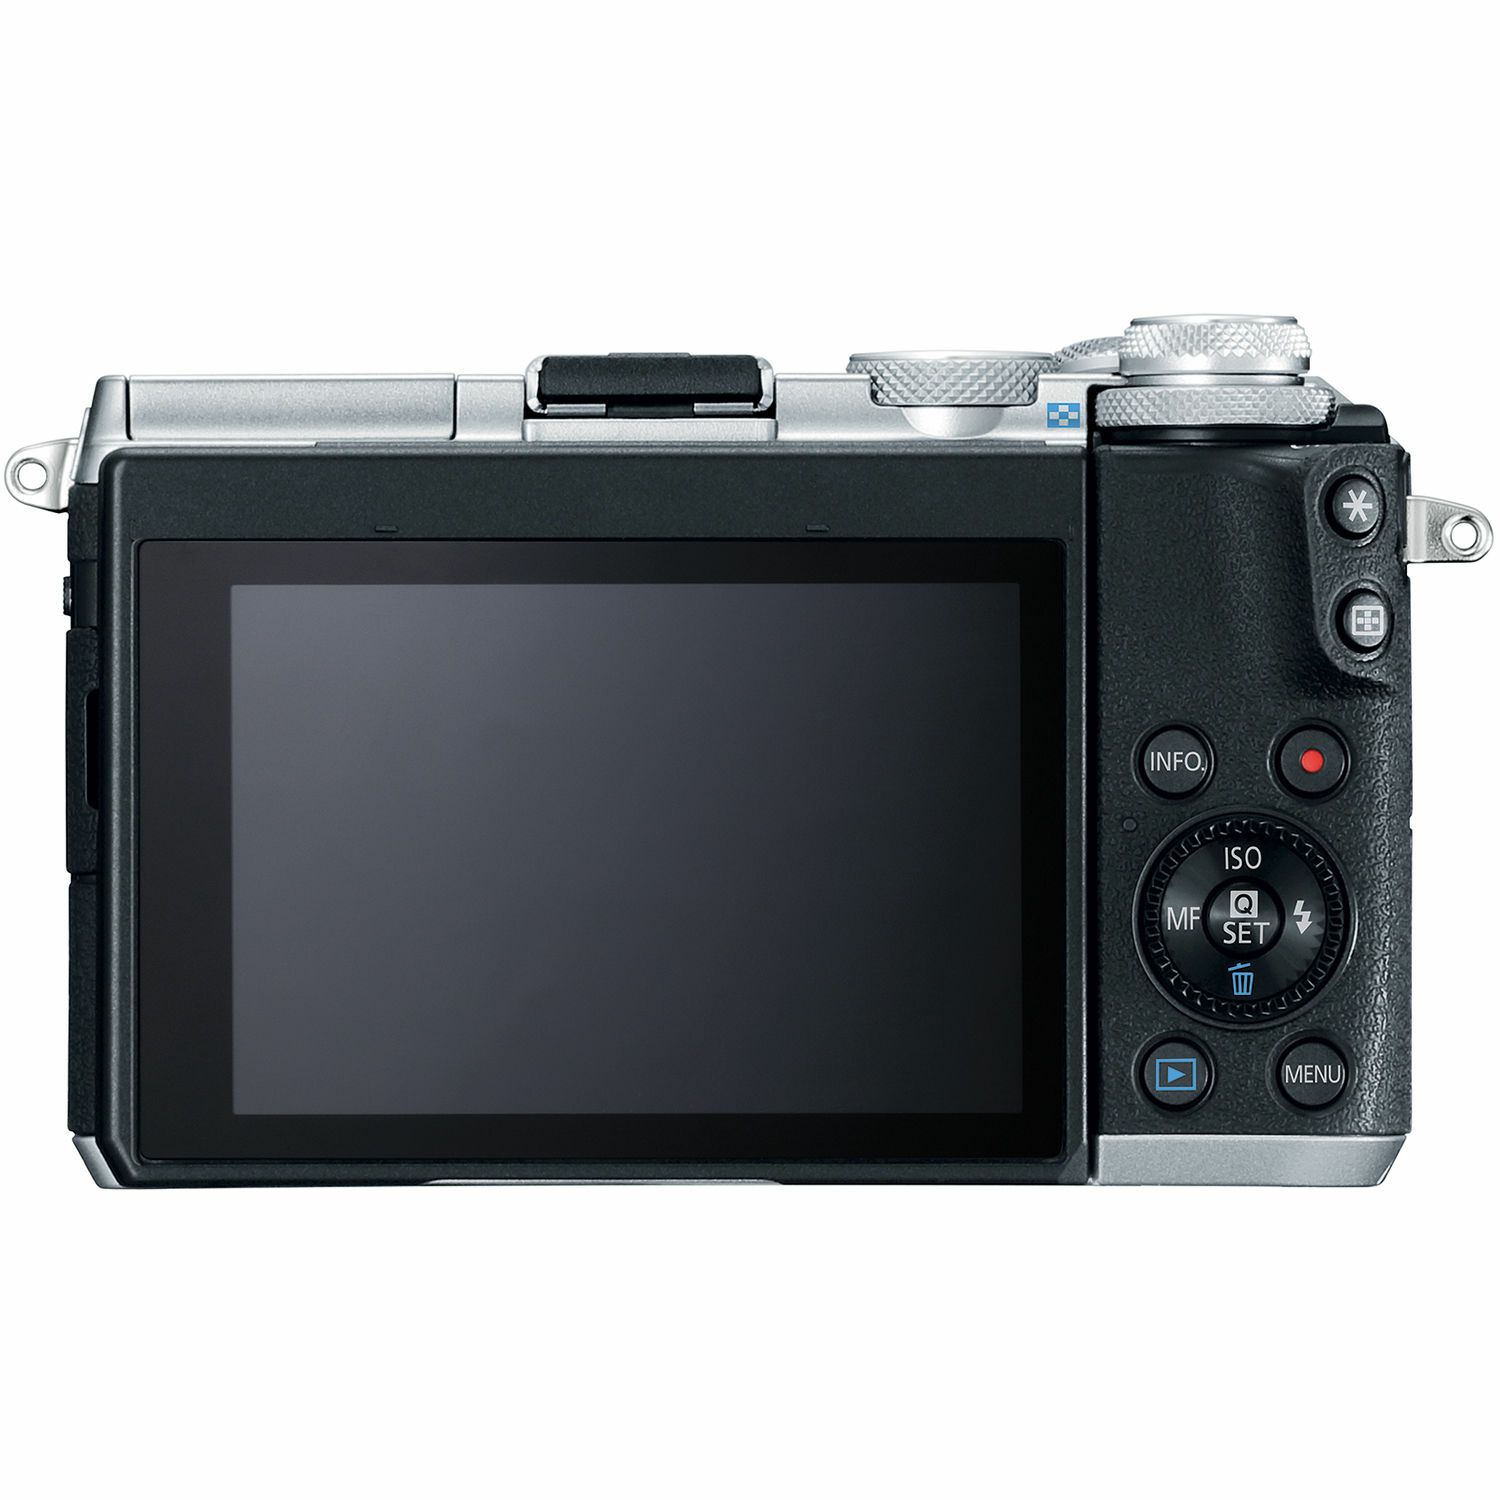 Canon EOS M6 Body Silver 24.2MP FullHD 60fps Dual Pixel CMOS AF WiFi Mirrorless Digital Camera srebreni digitalni fotoaparat (1725C002AA)